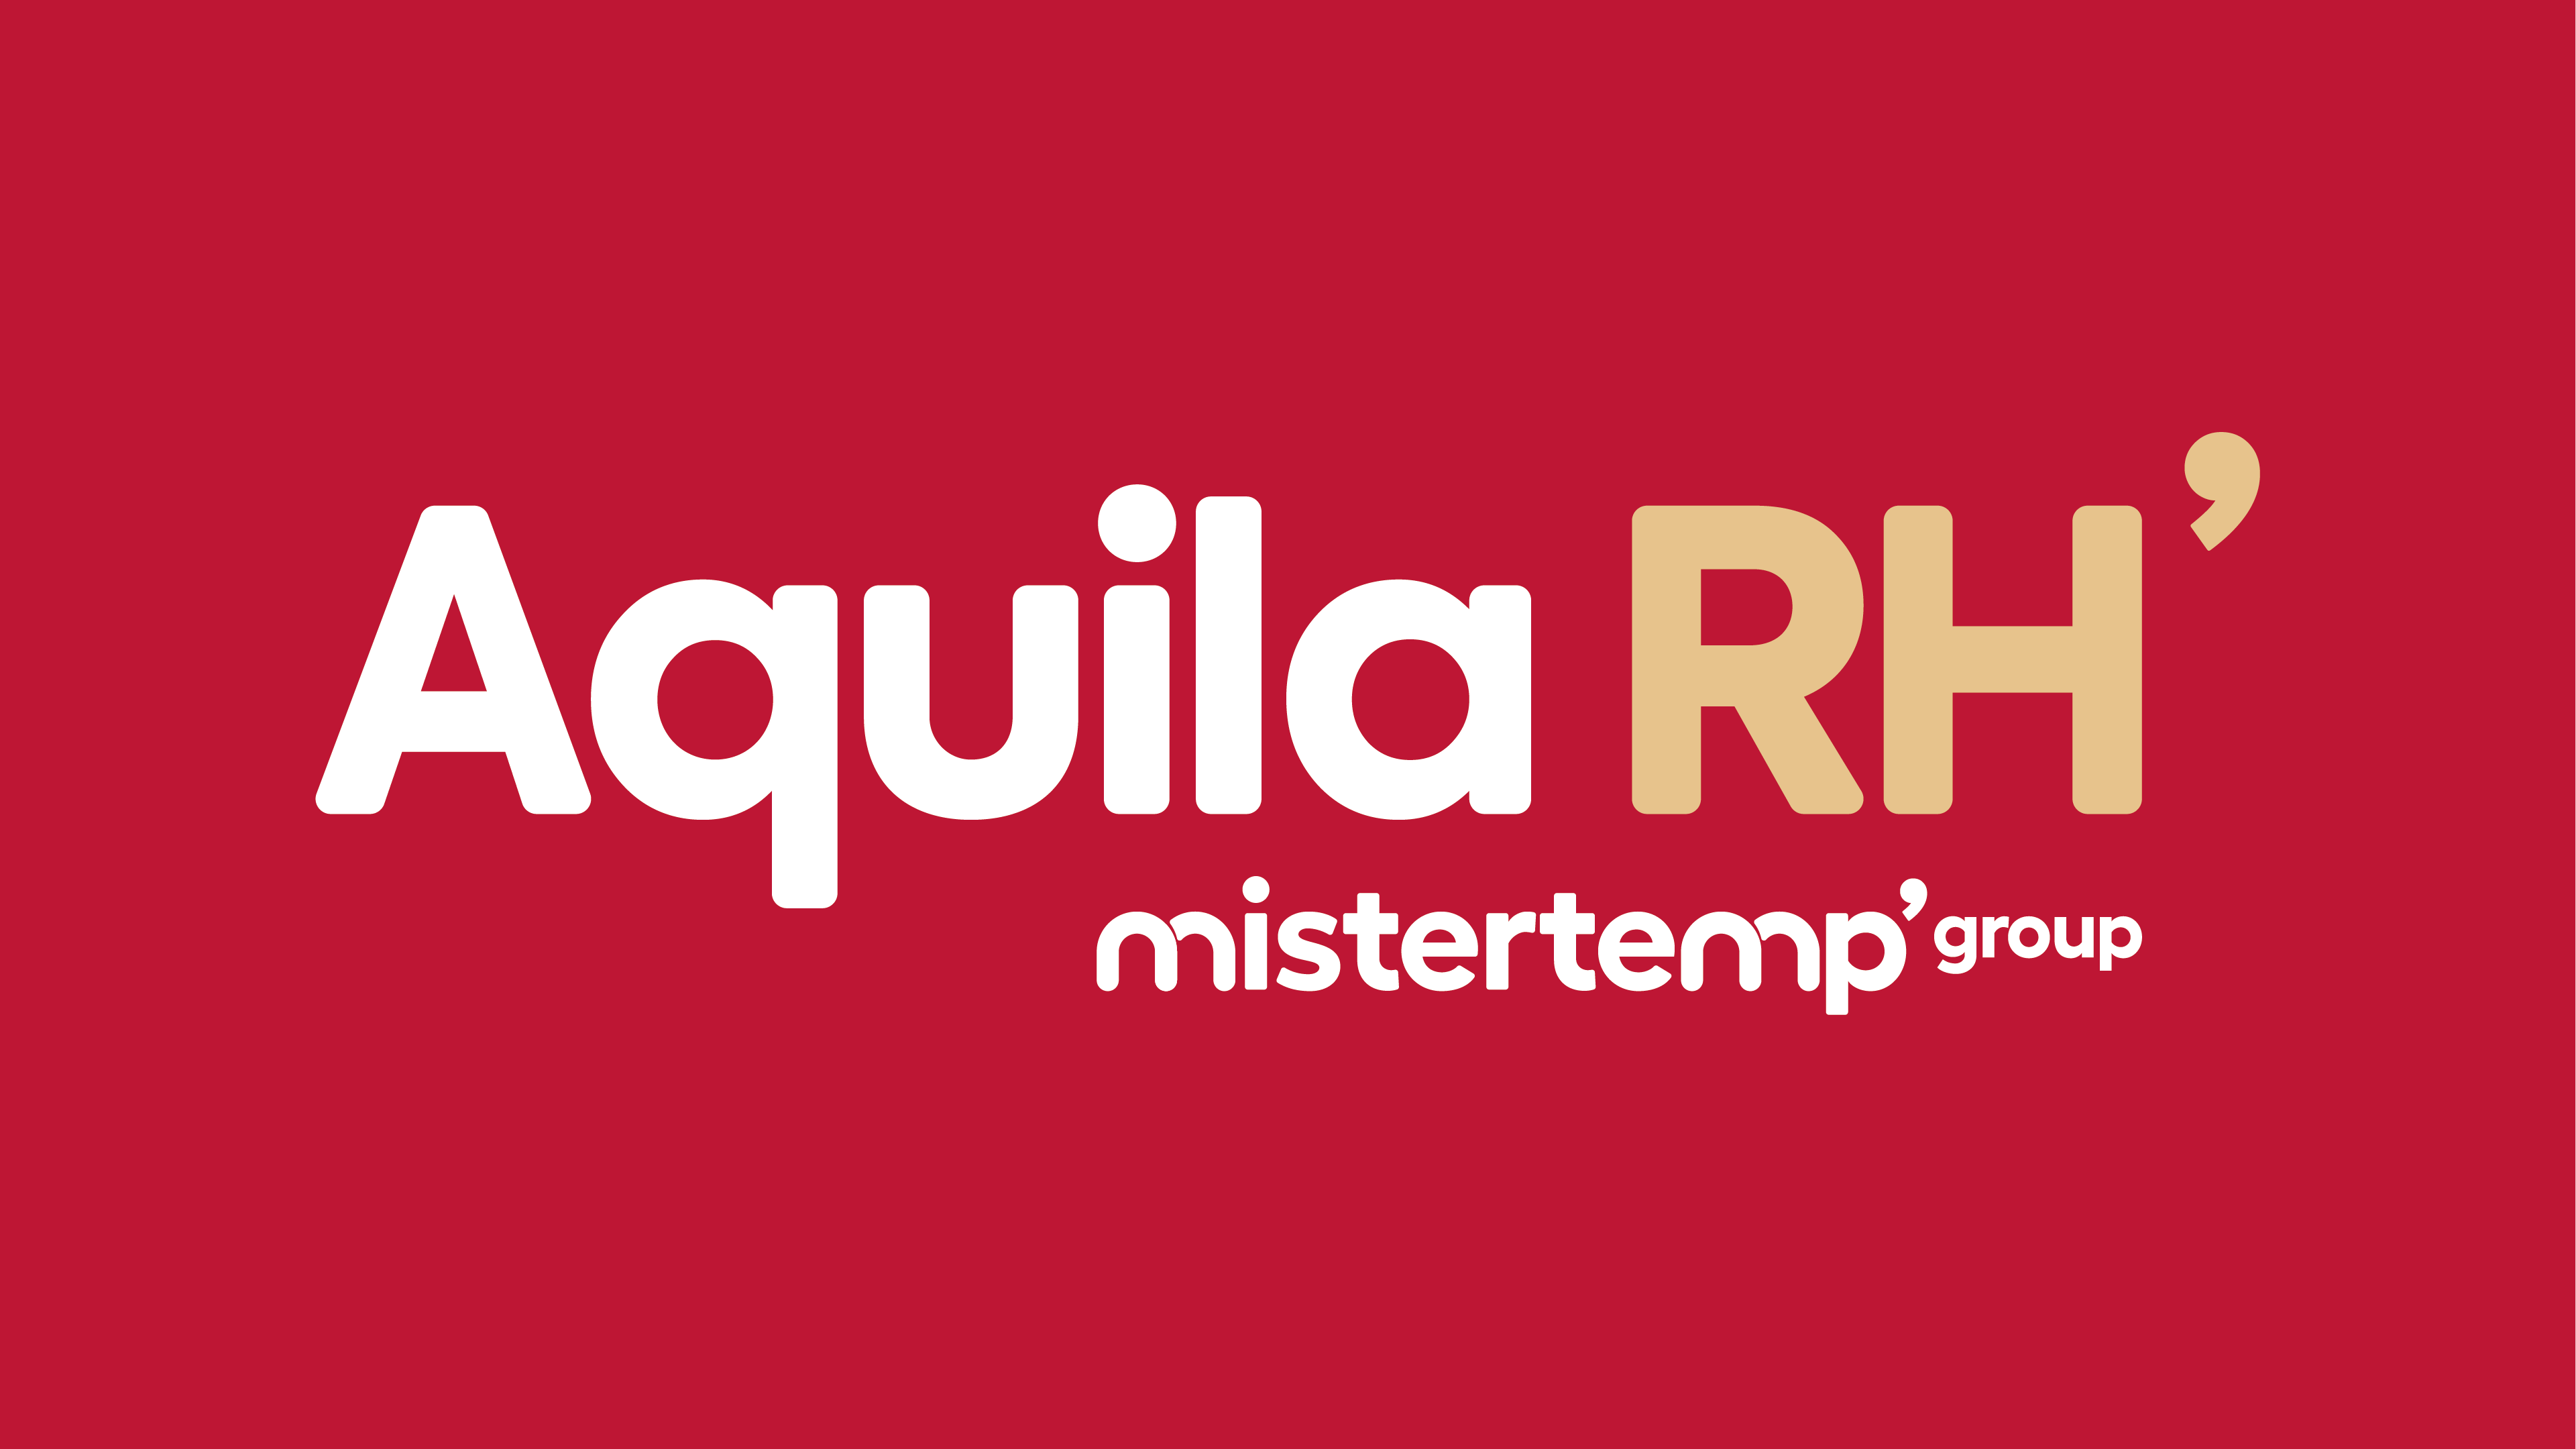 Aquila RH